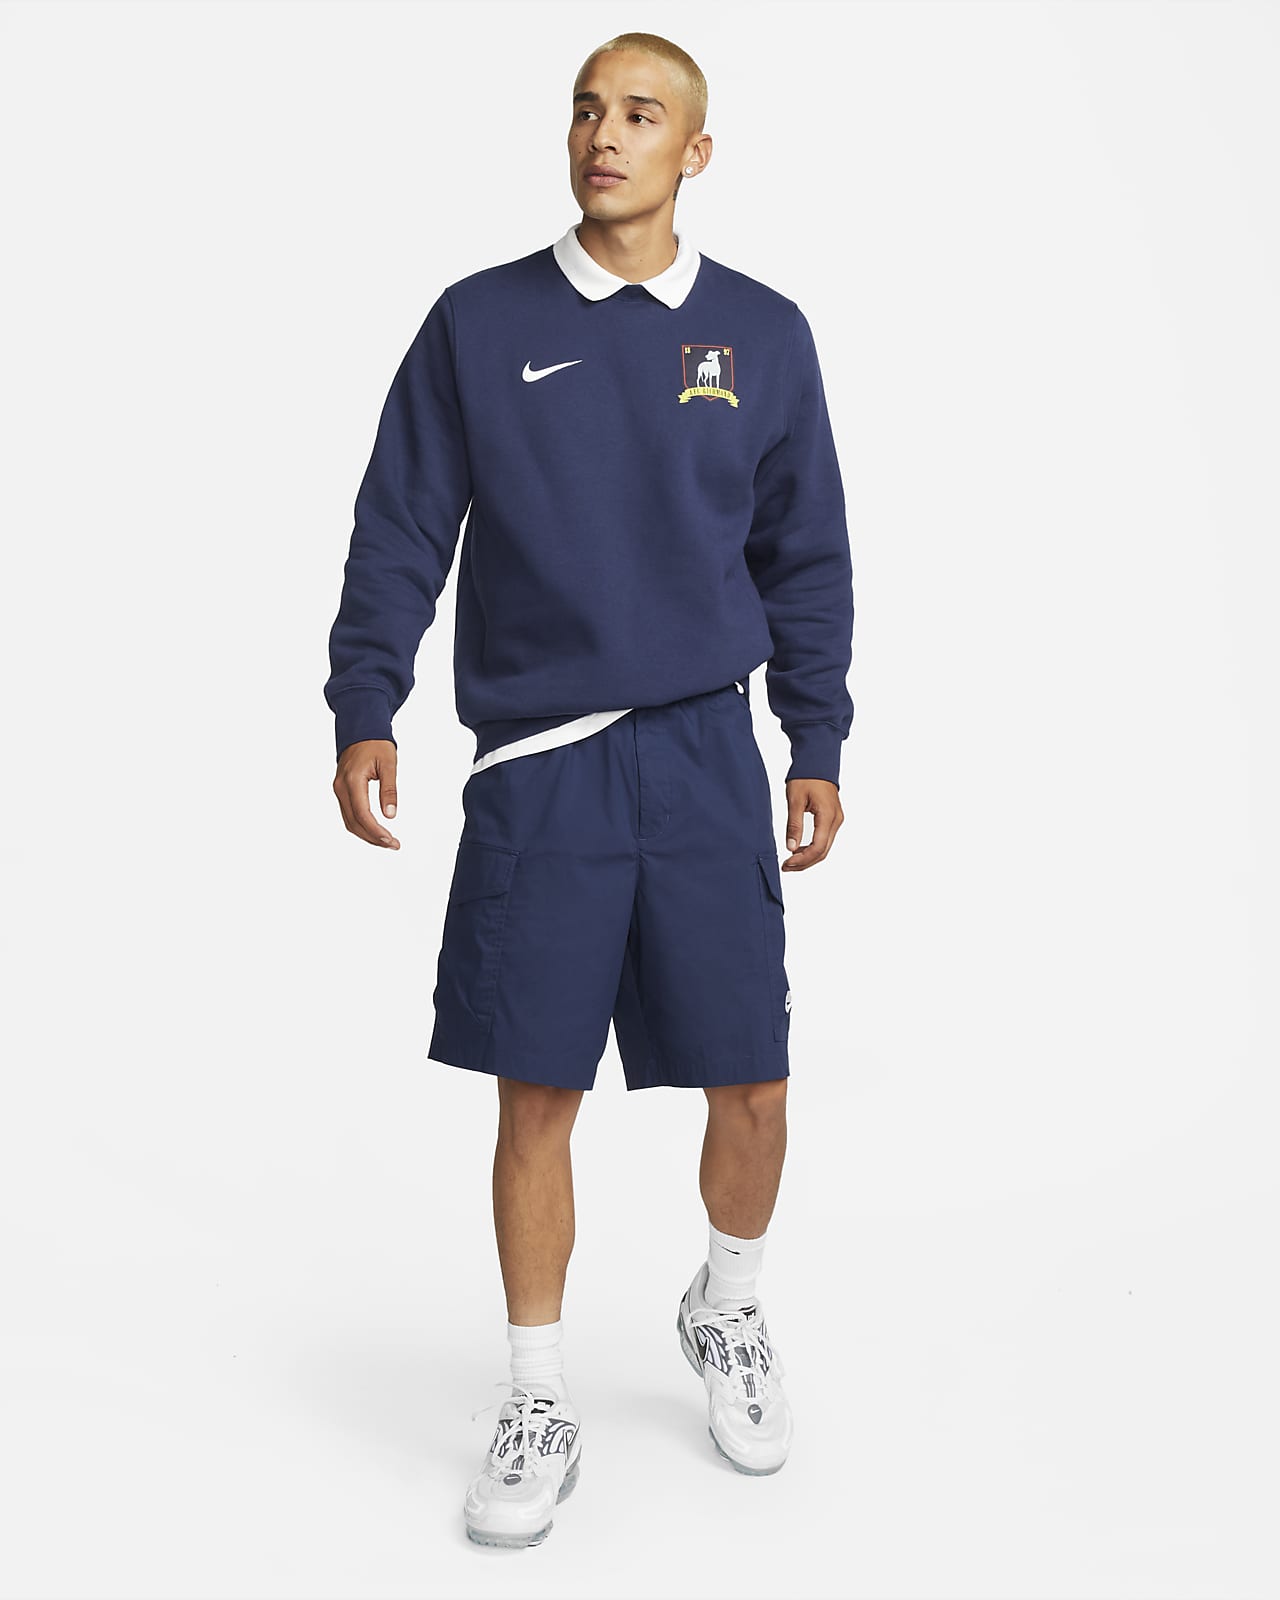 AFC Richmond Men's Nike Club Fleece Sweatshirt. Nike BG